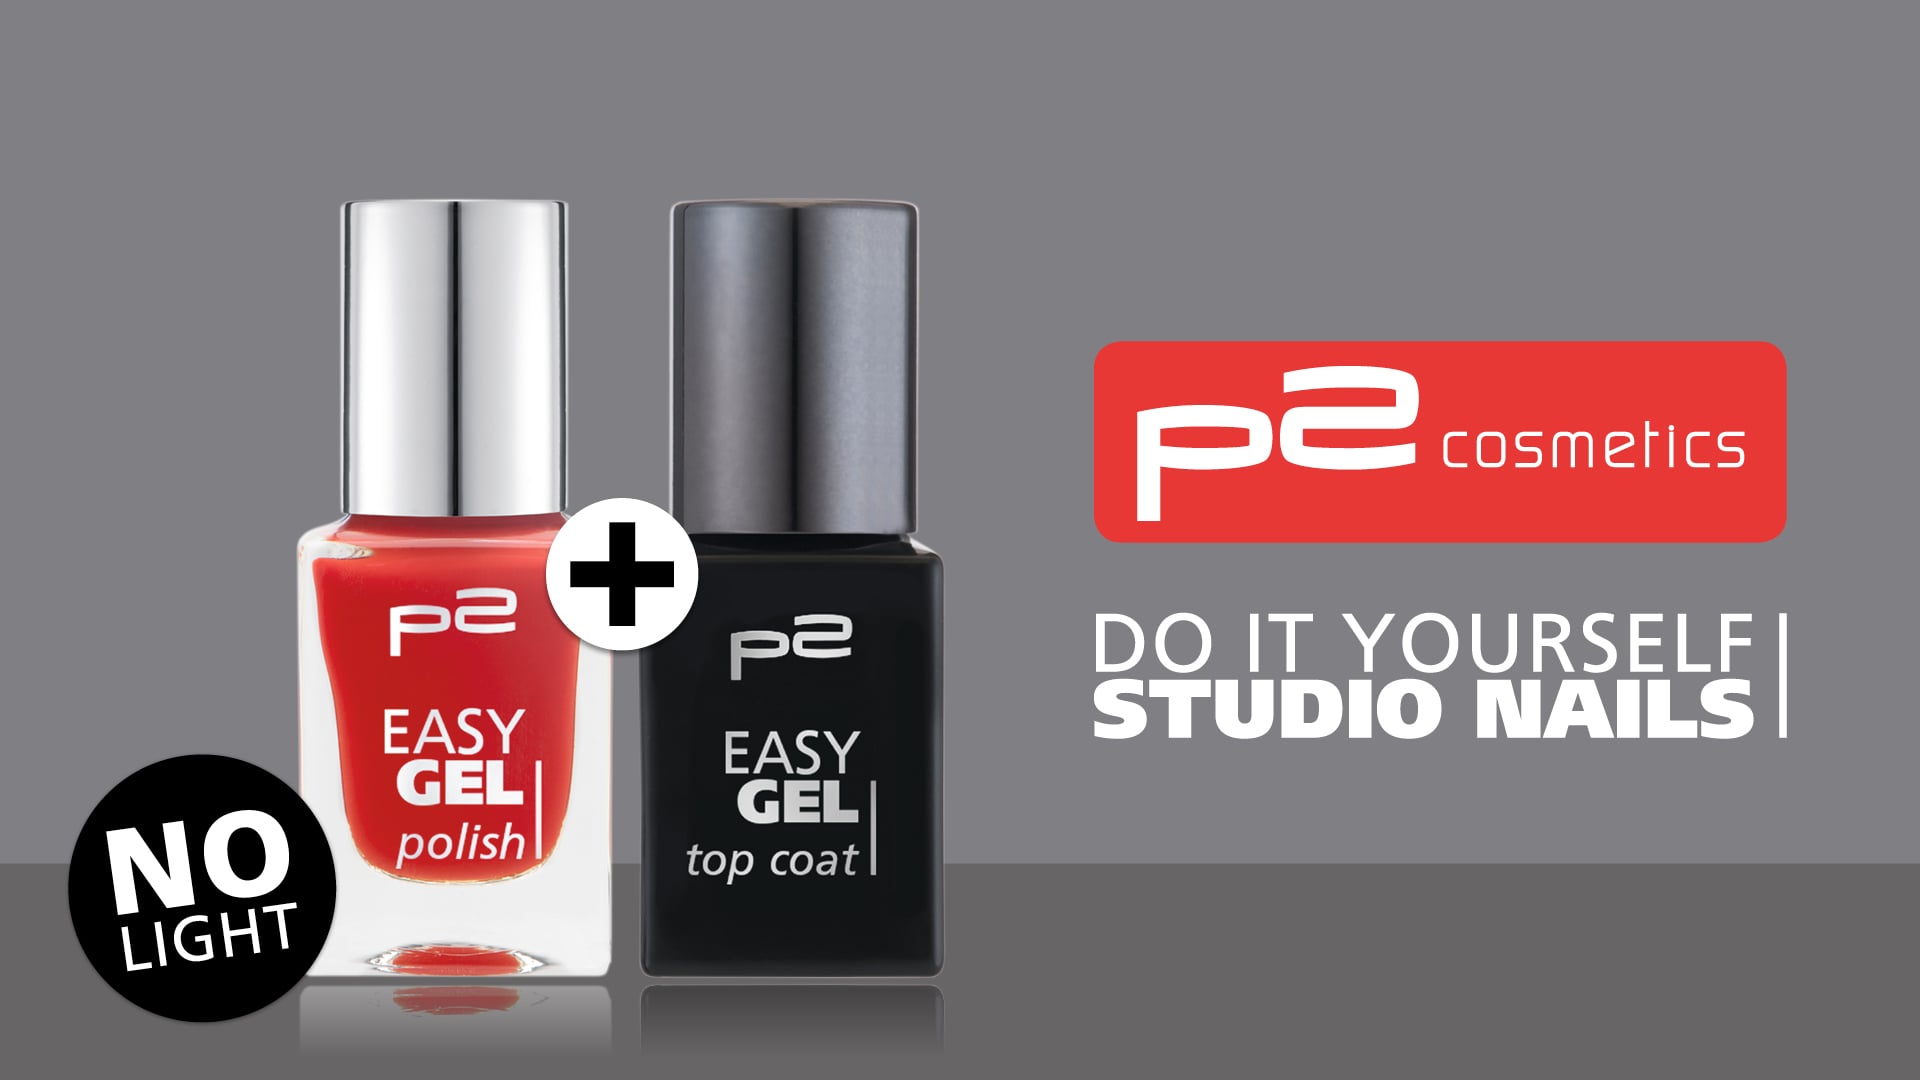 p2 cosmetics | Easy Gel Polish on Vimeo